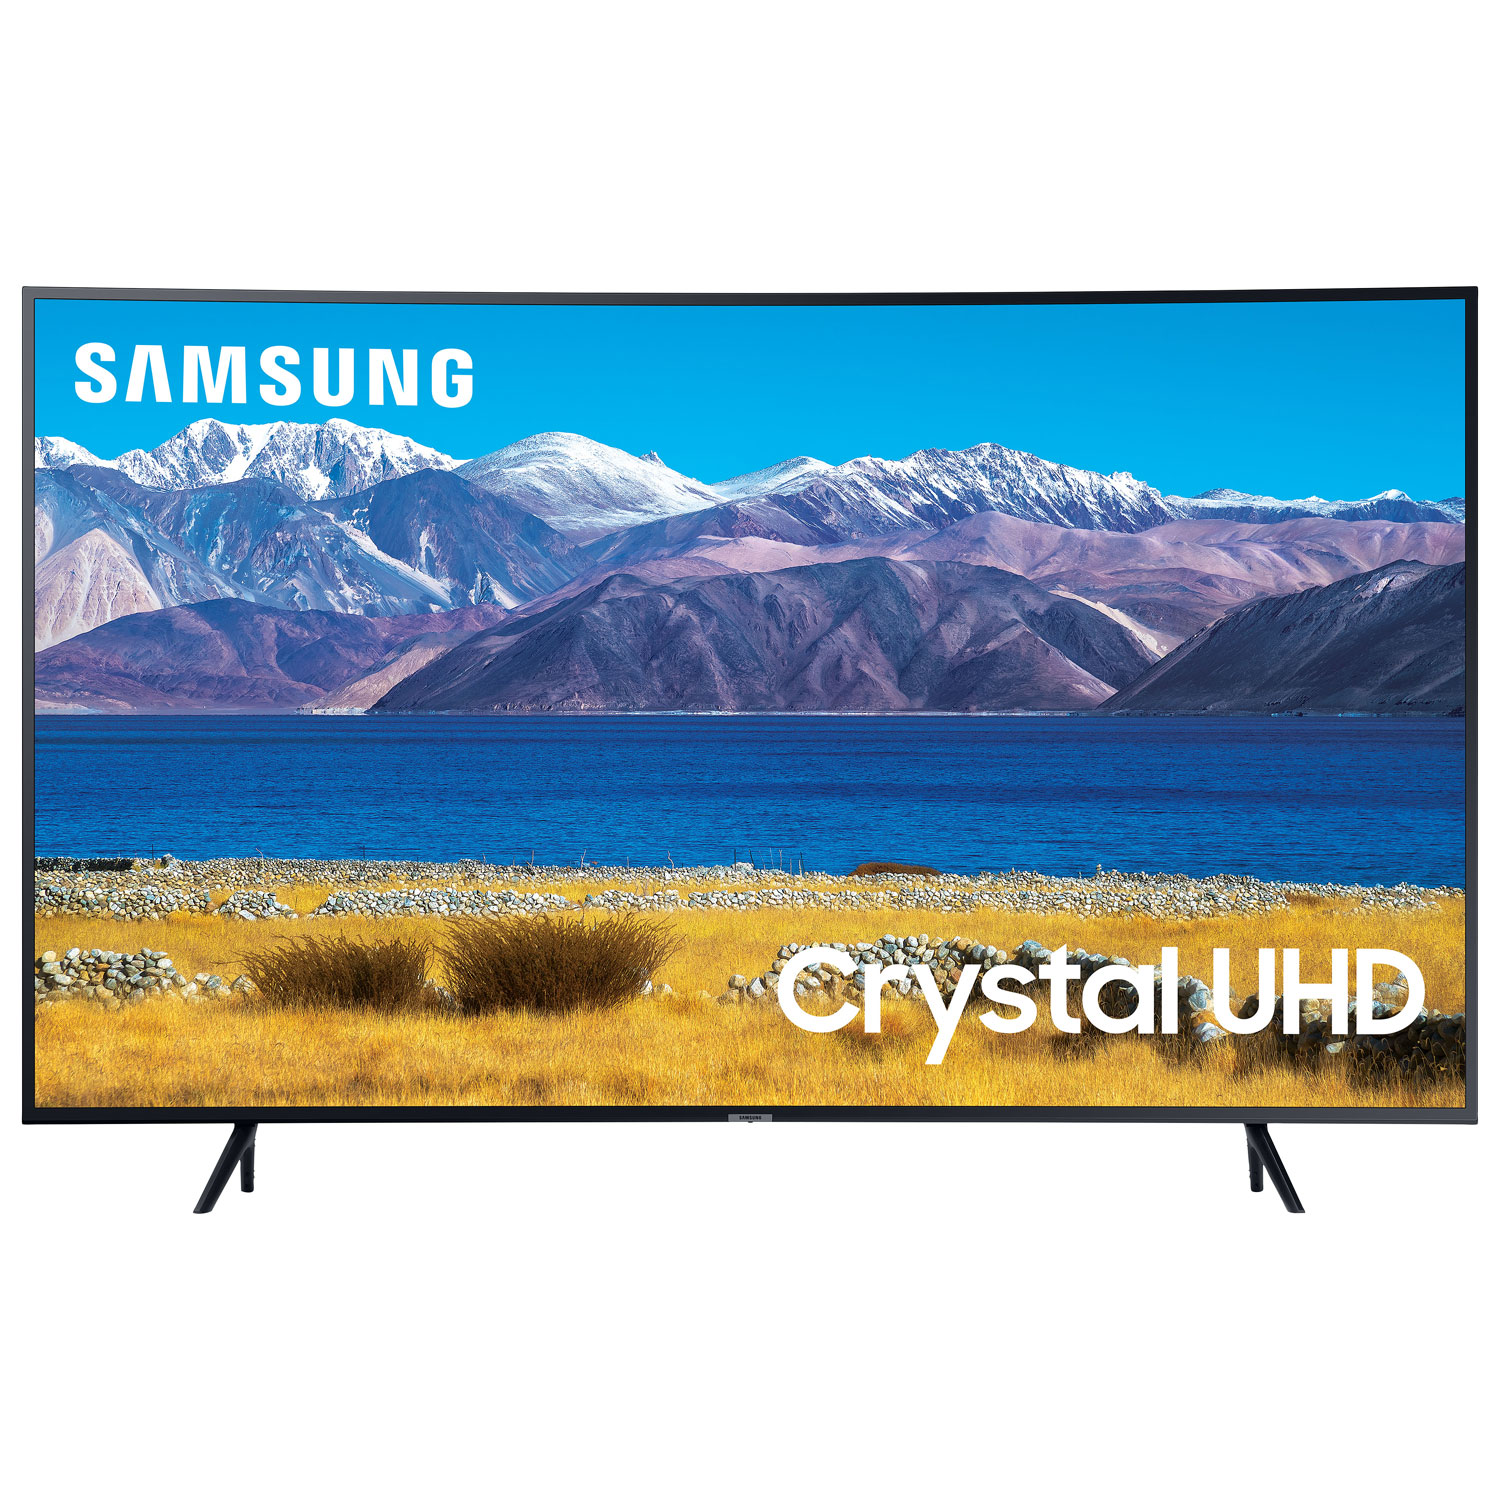 Samsung 55" 4K UHD HDR Curved LED Tizen OS Smart TV (UN55TU8300FXZC) - 2020 - Charcoal Black